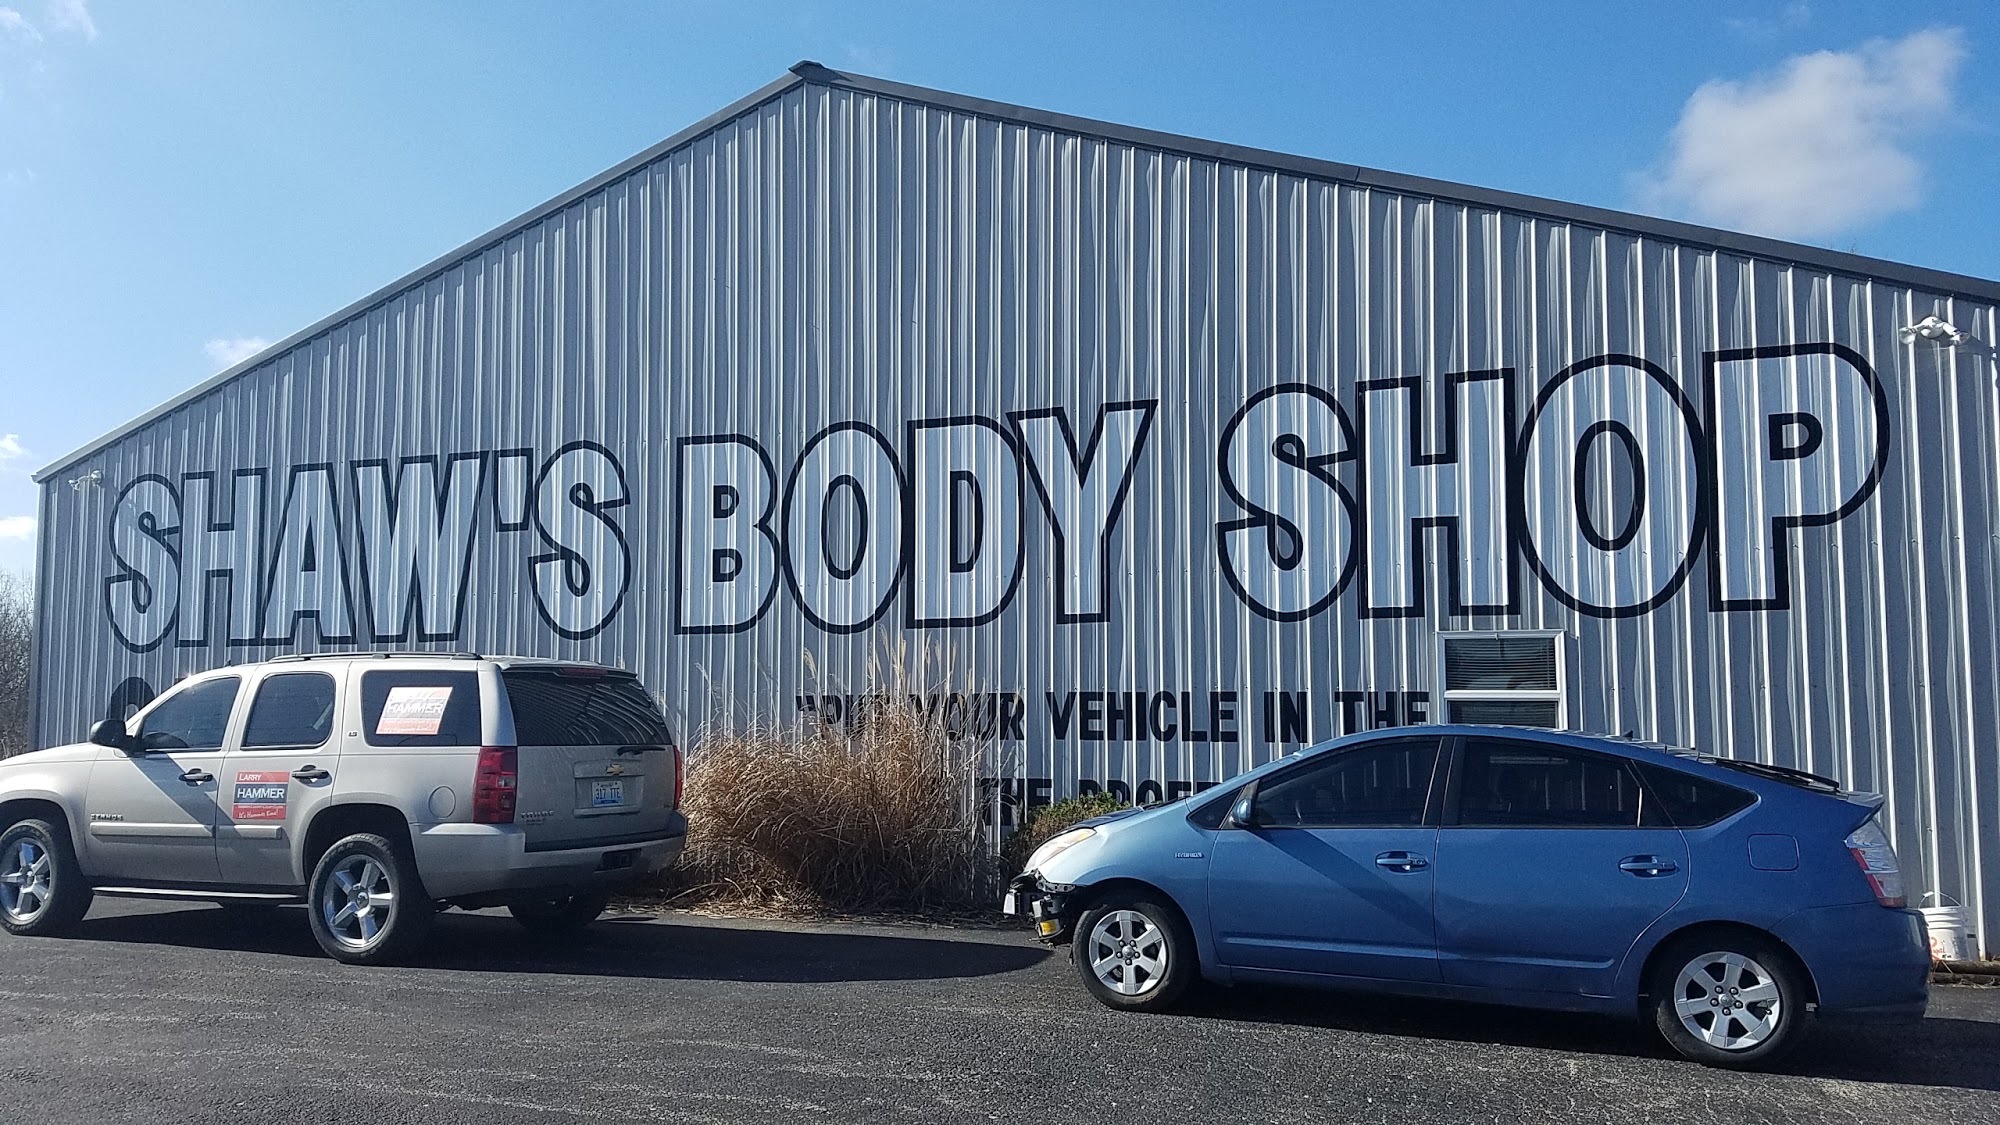 Shaw's Body Shop